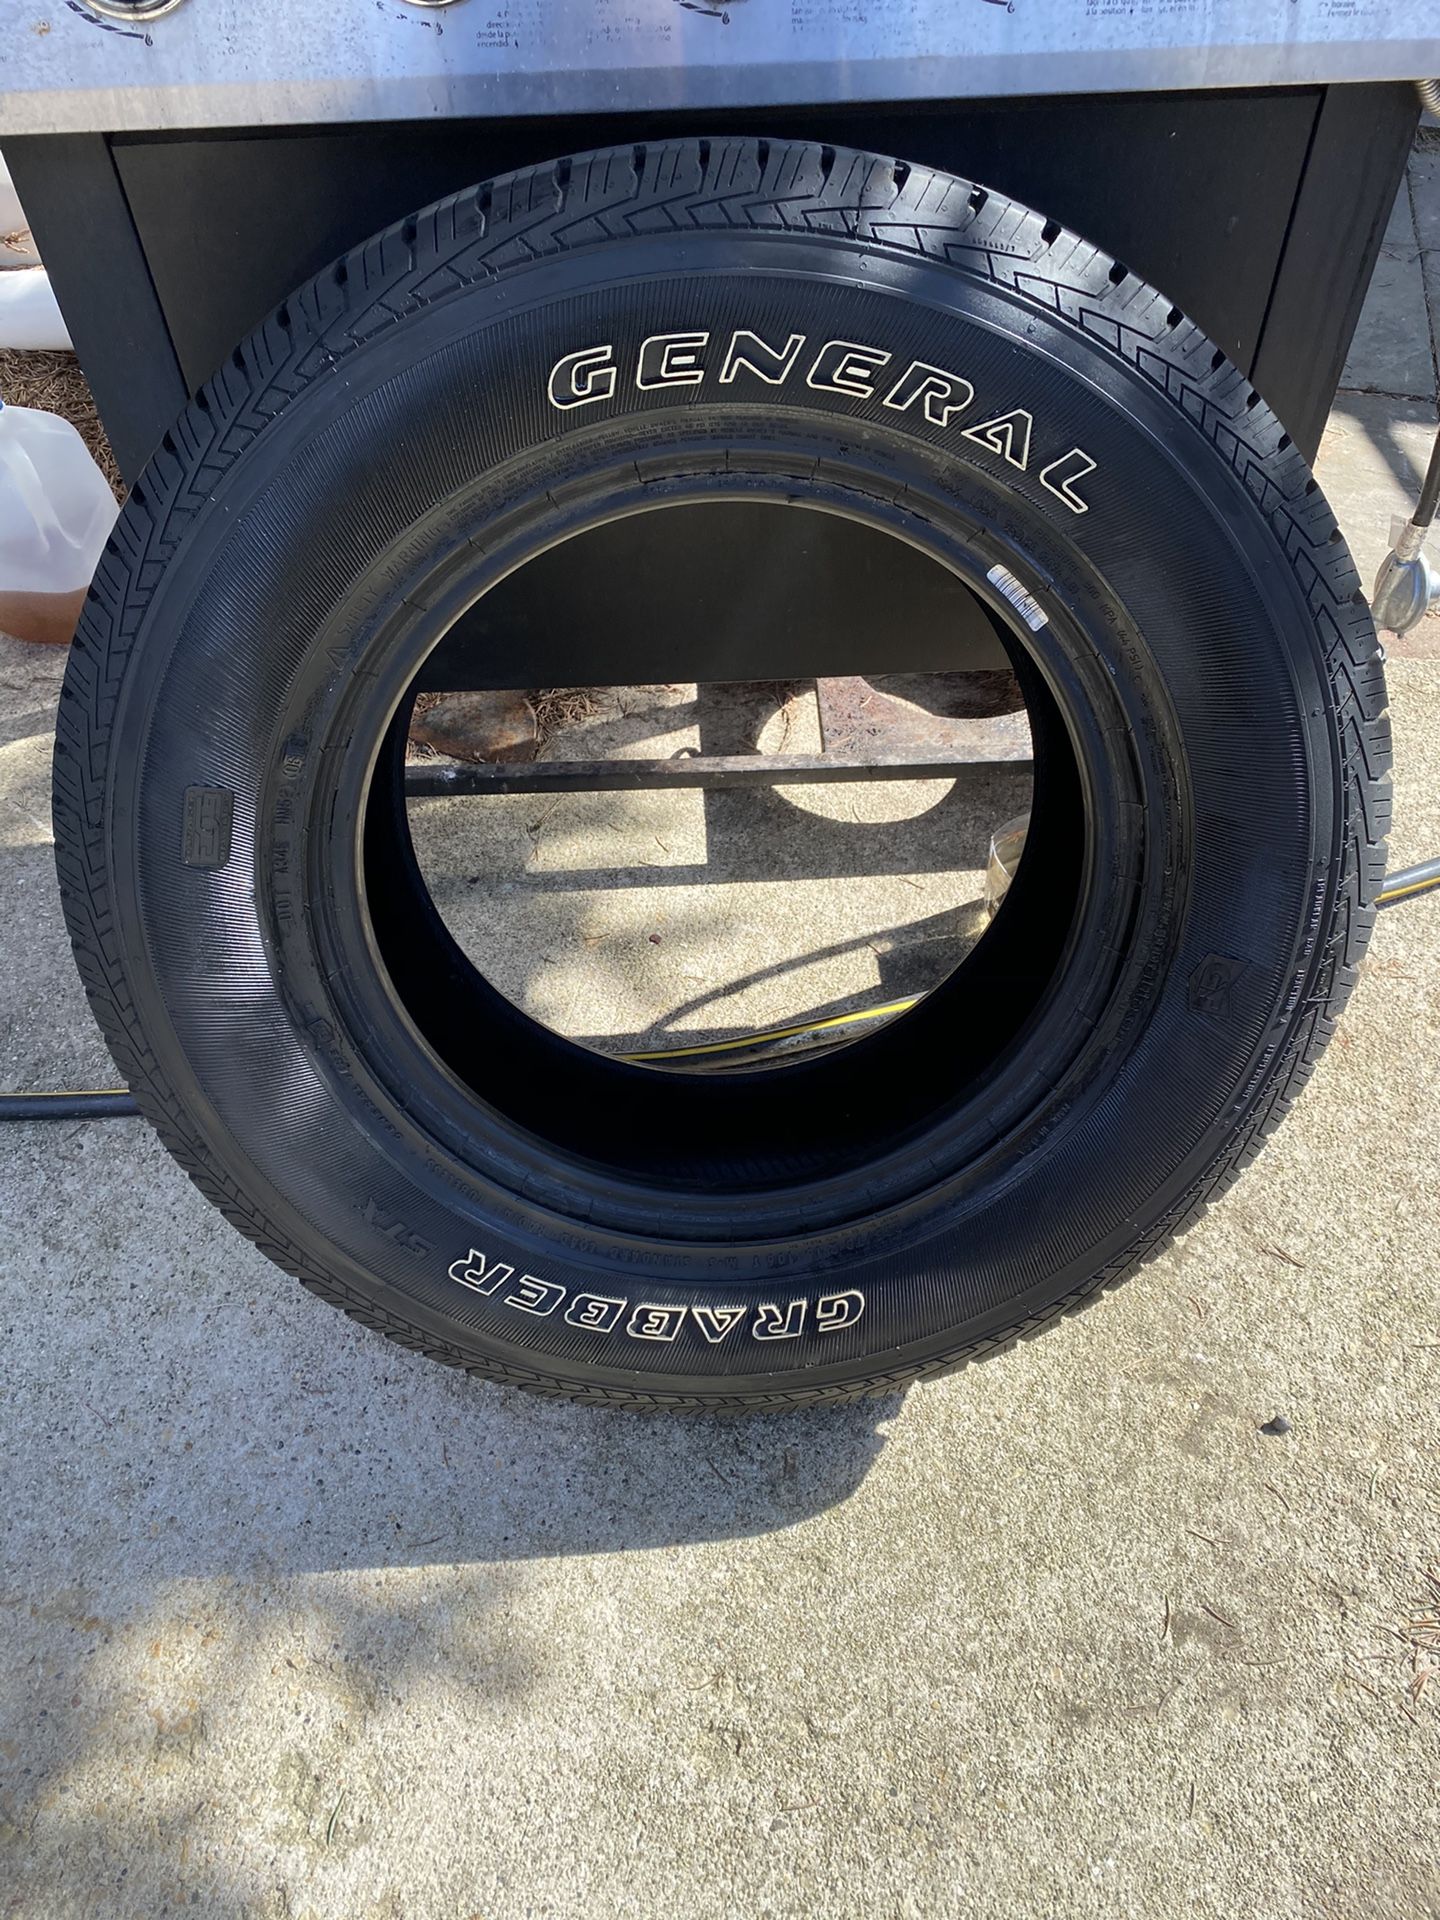 Pair of General Grabber STX Tires, 235/70R16, 106T